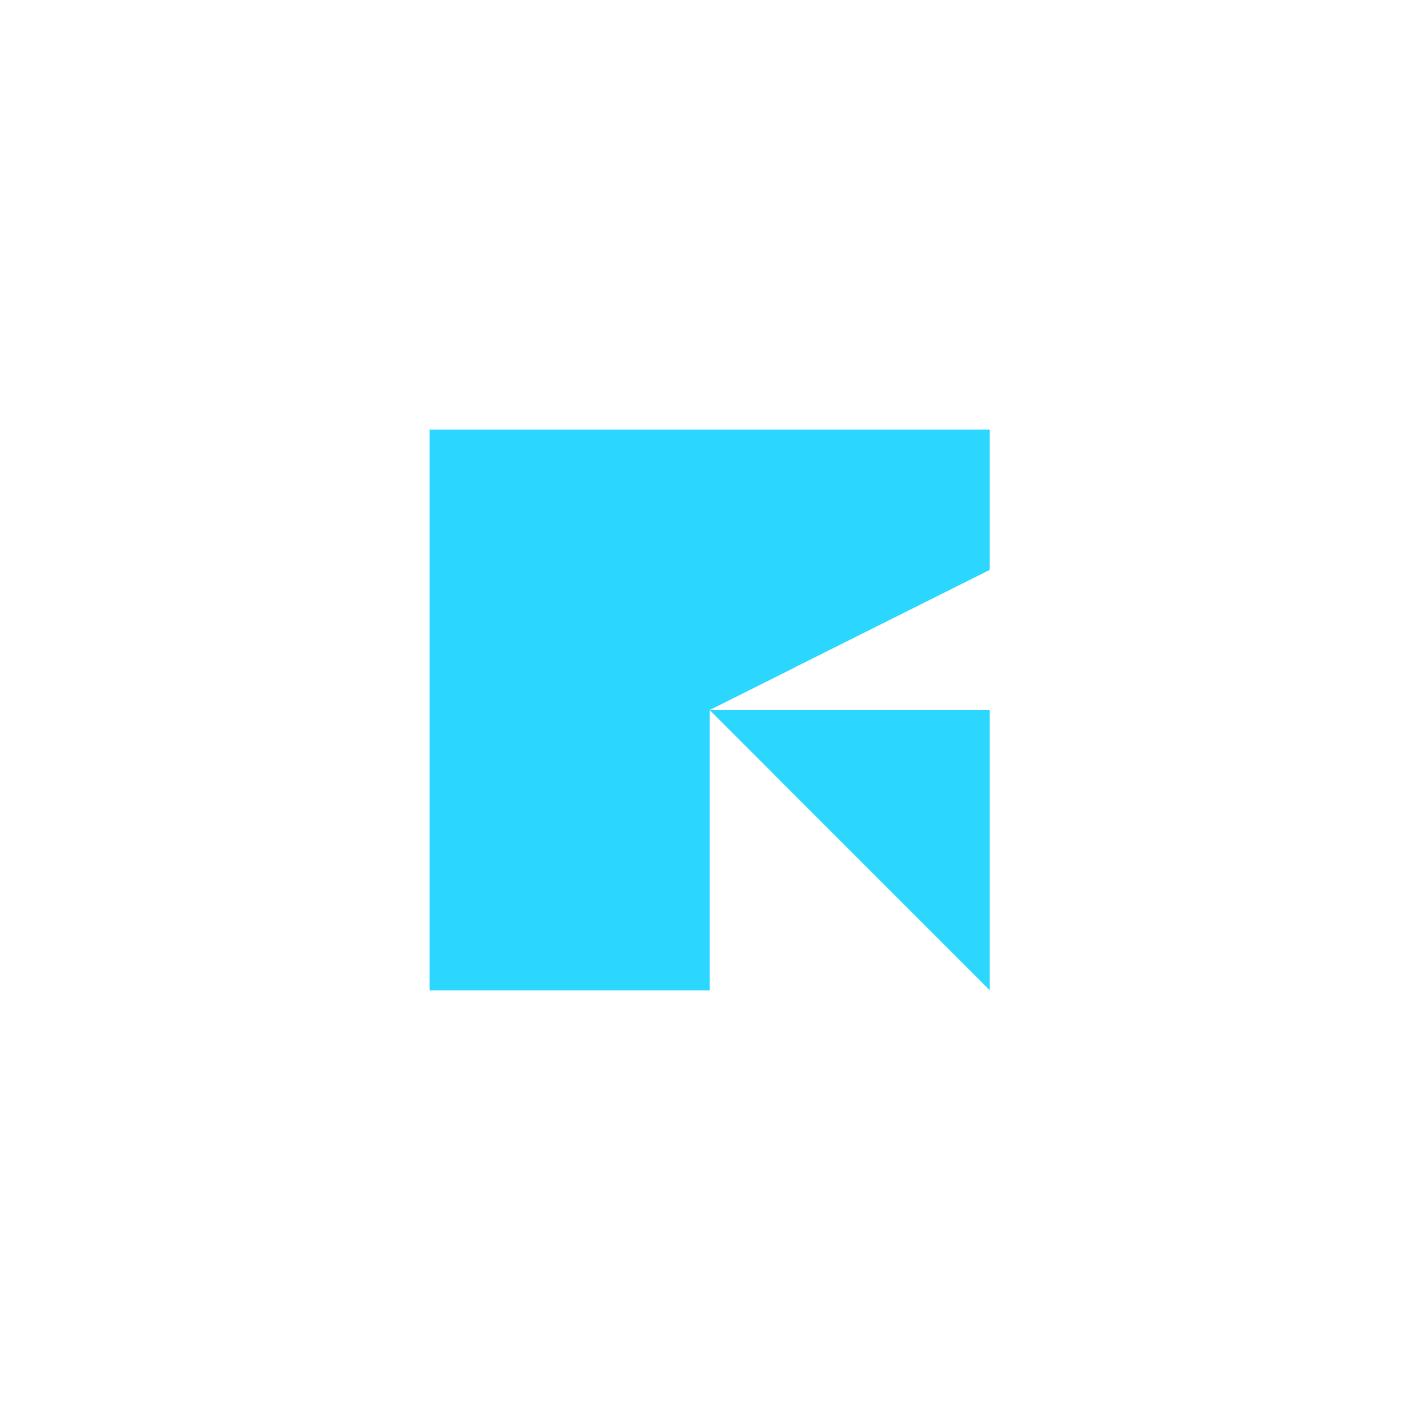 Ricardo Morel